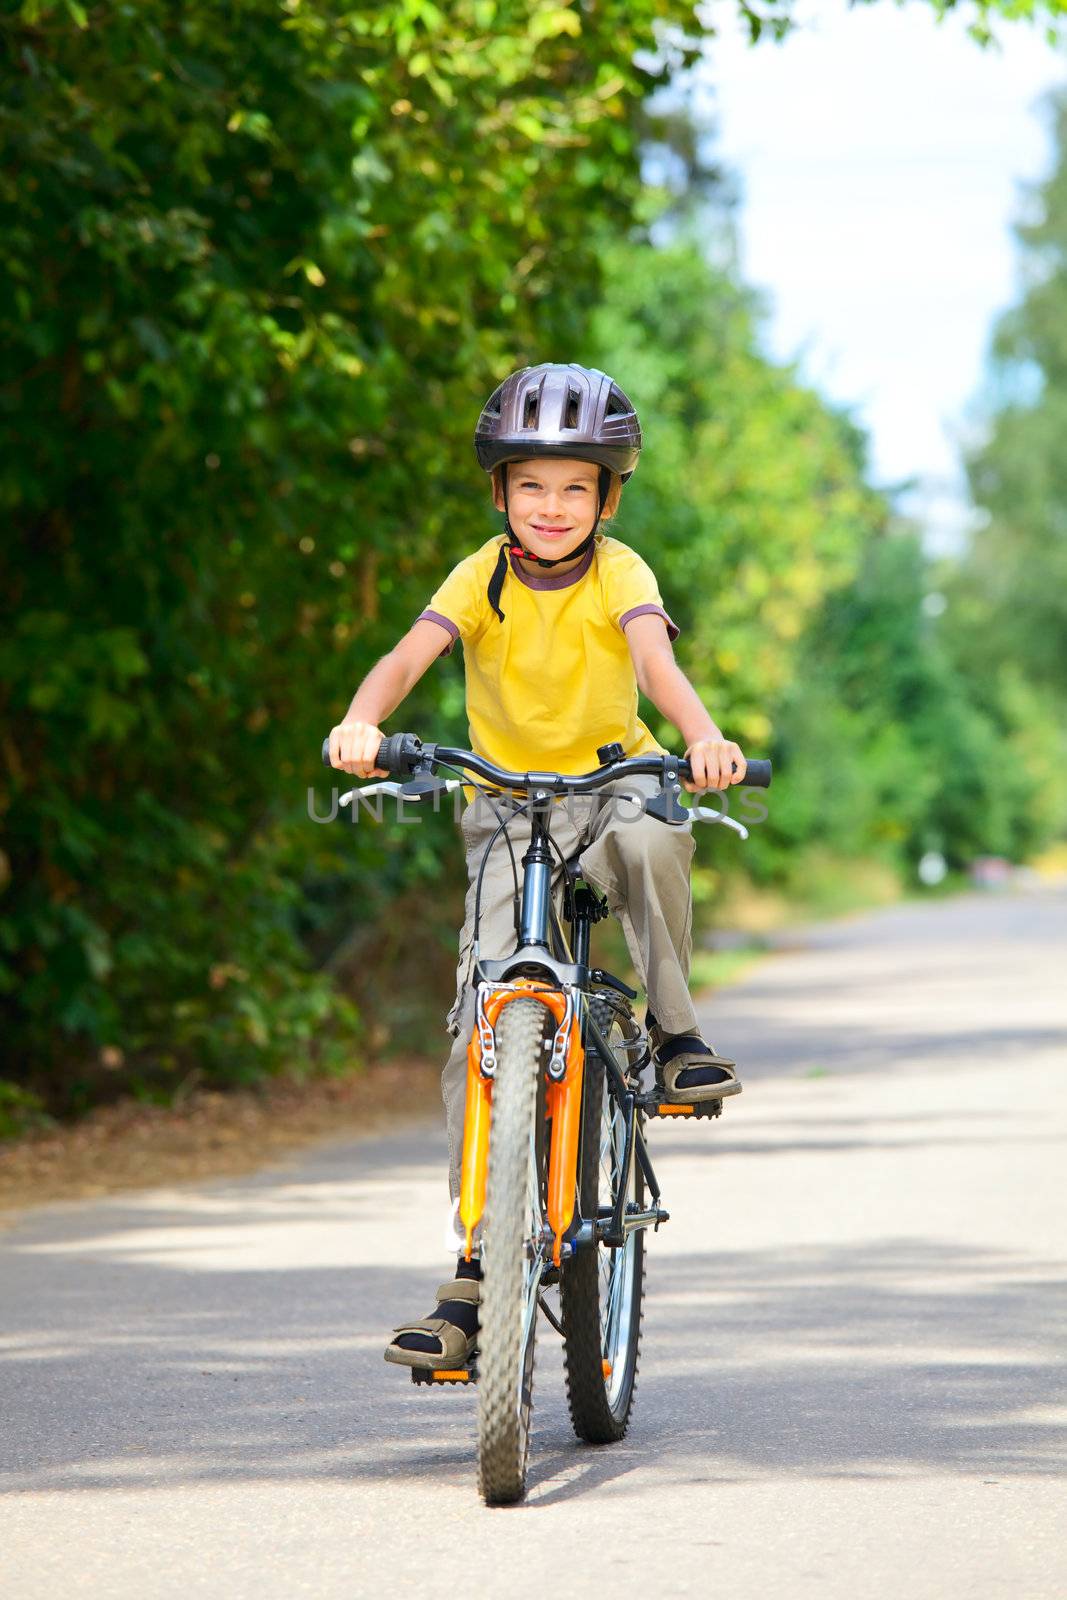 Kid on a bike by naumoid